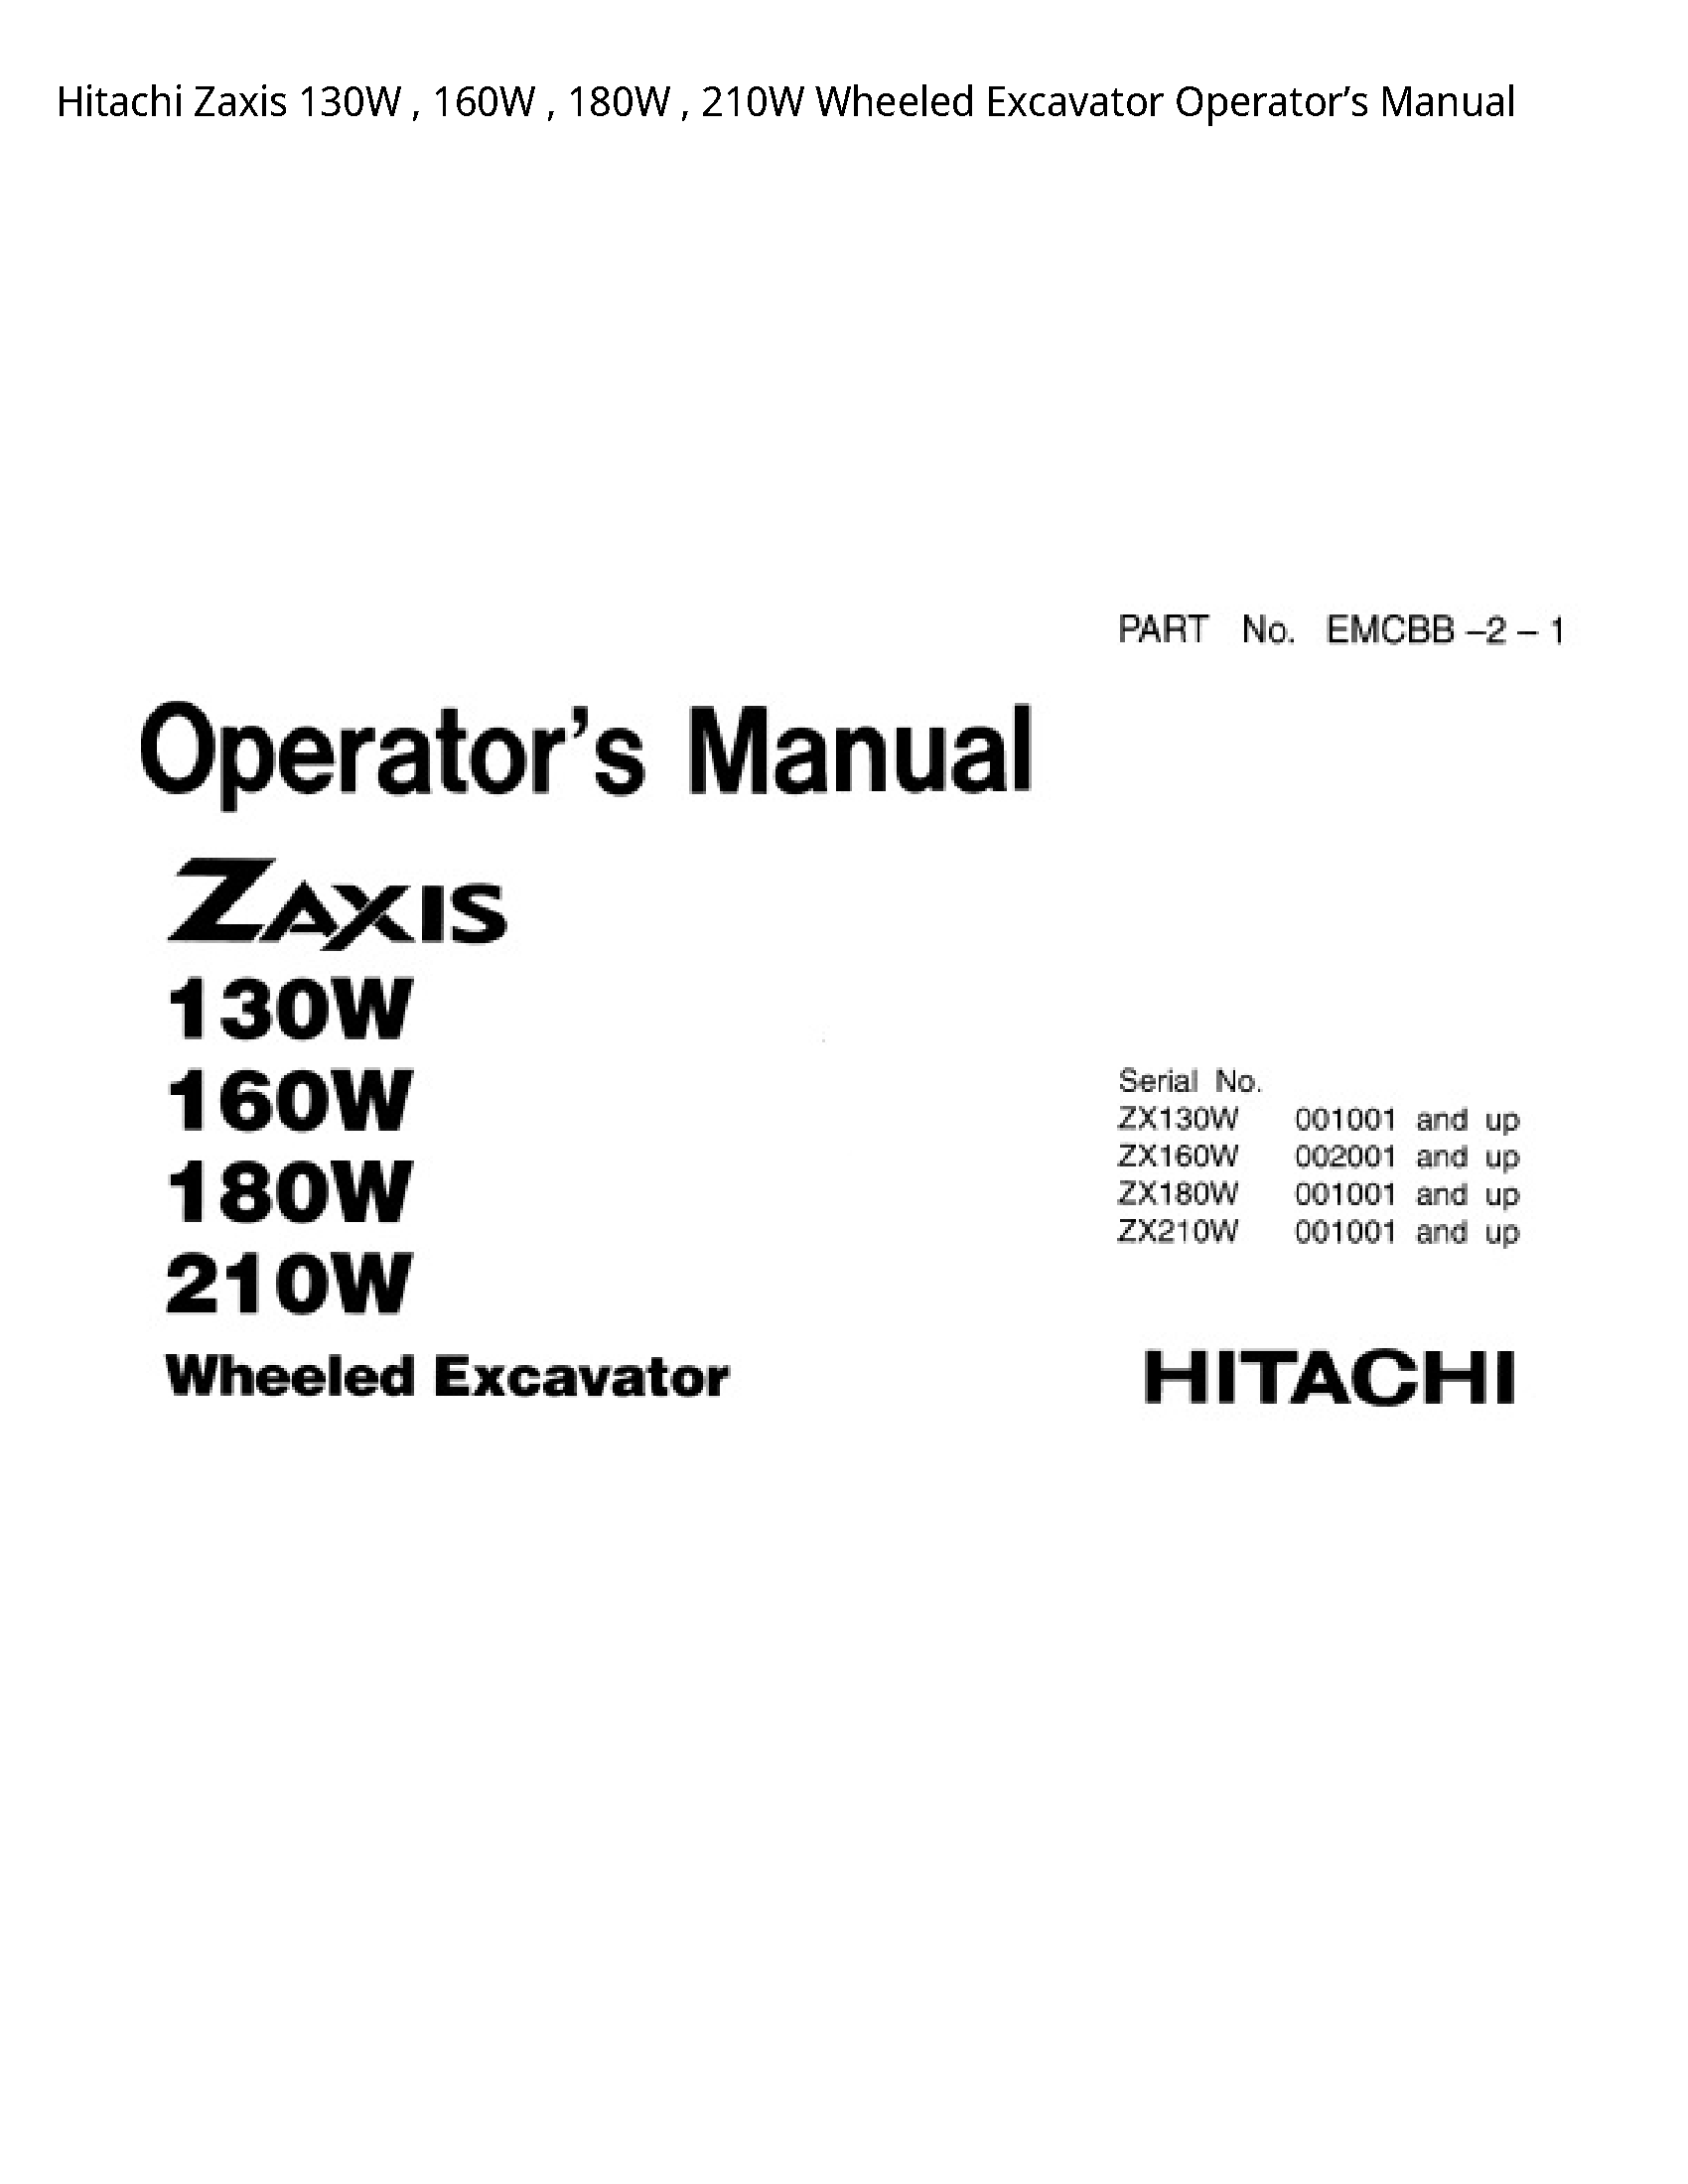 Hitachi 130W Zaxis Wheeled Excavator Operator’s manual